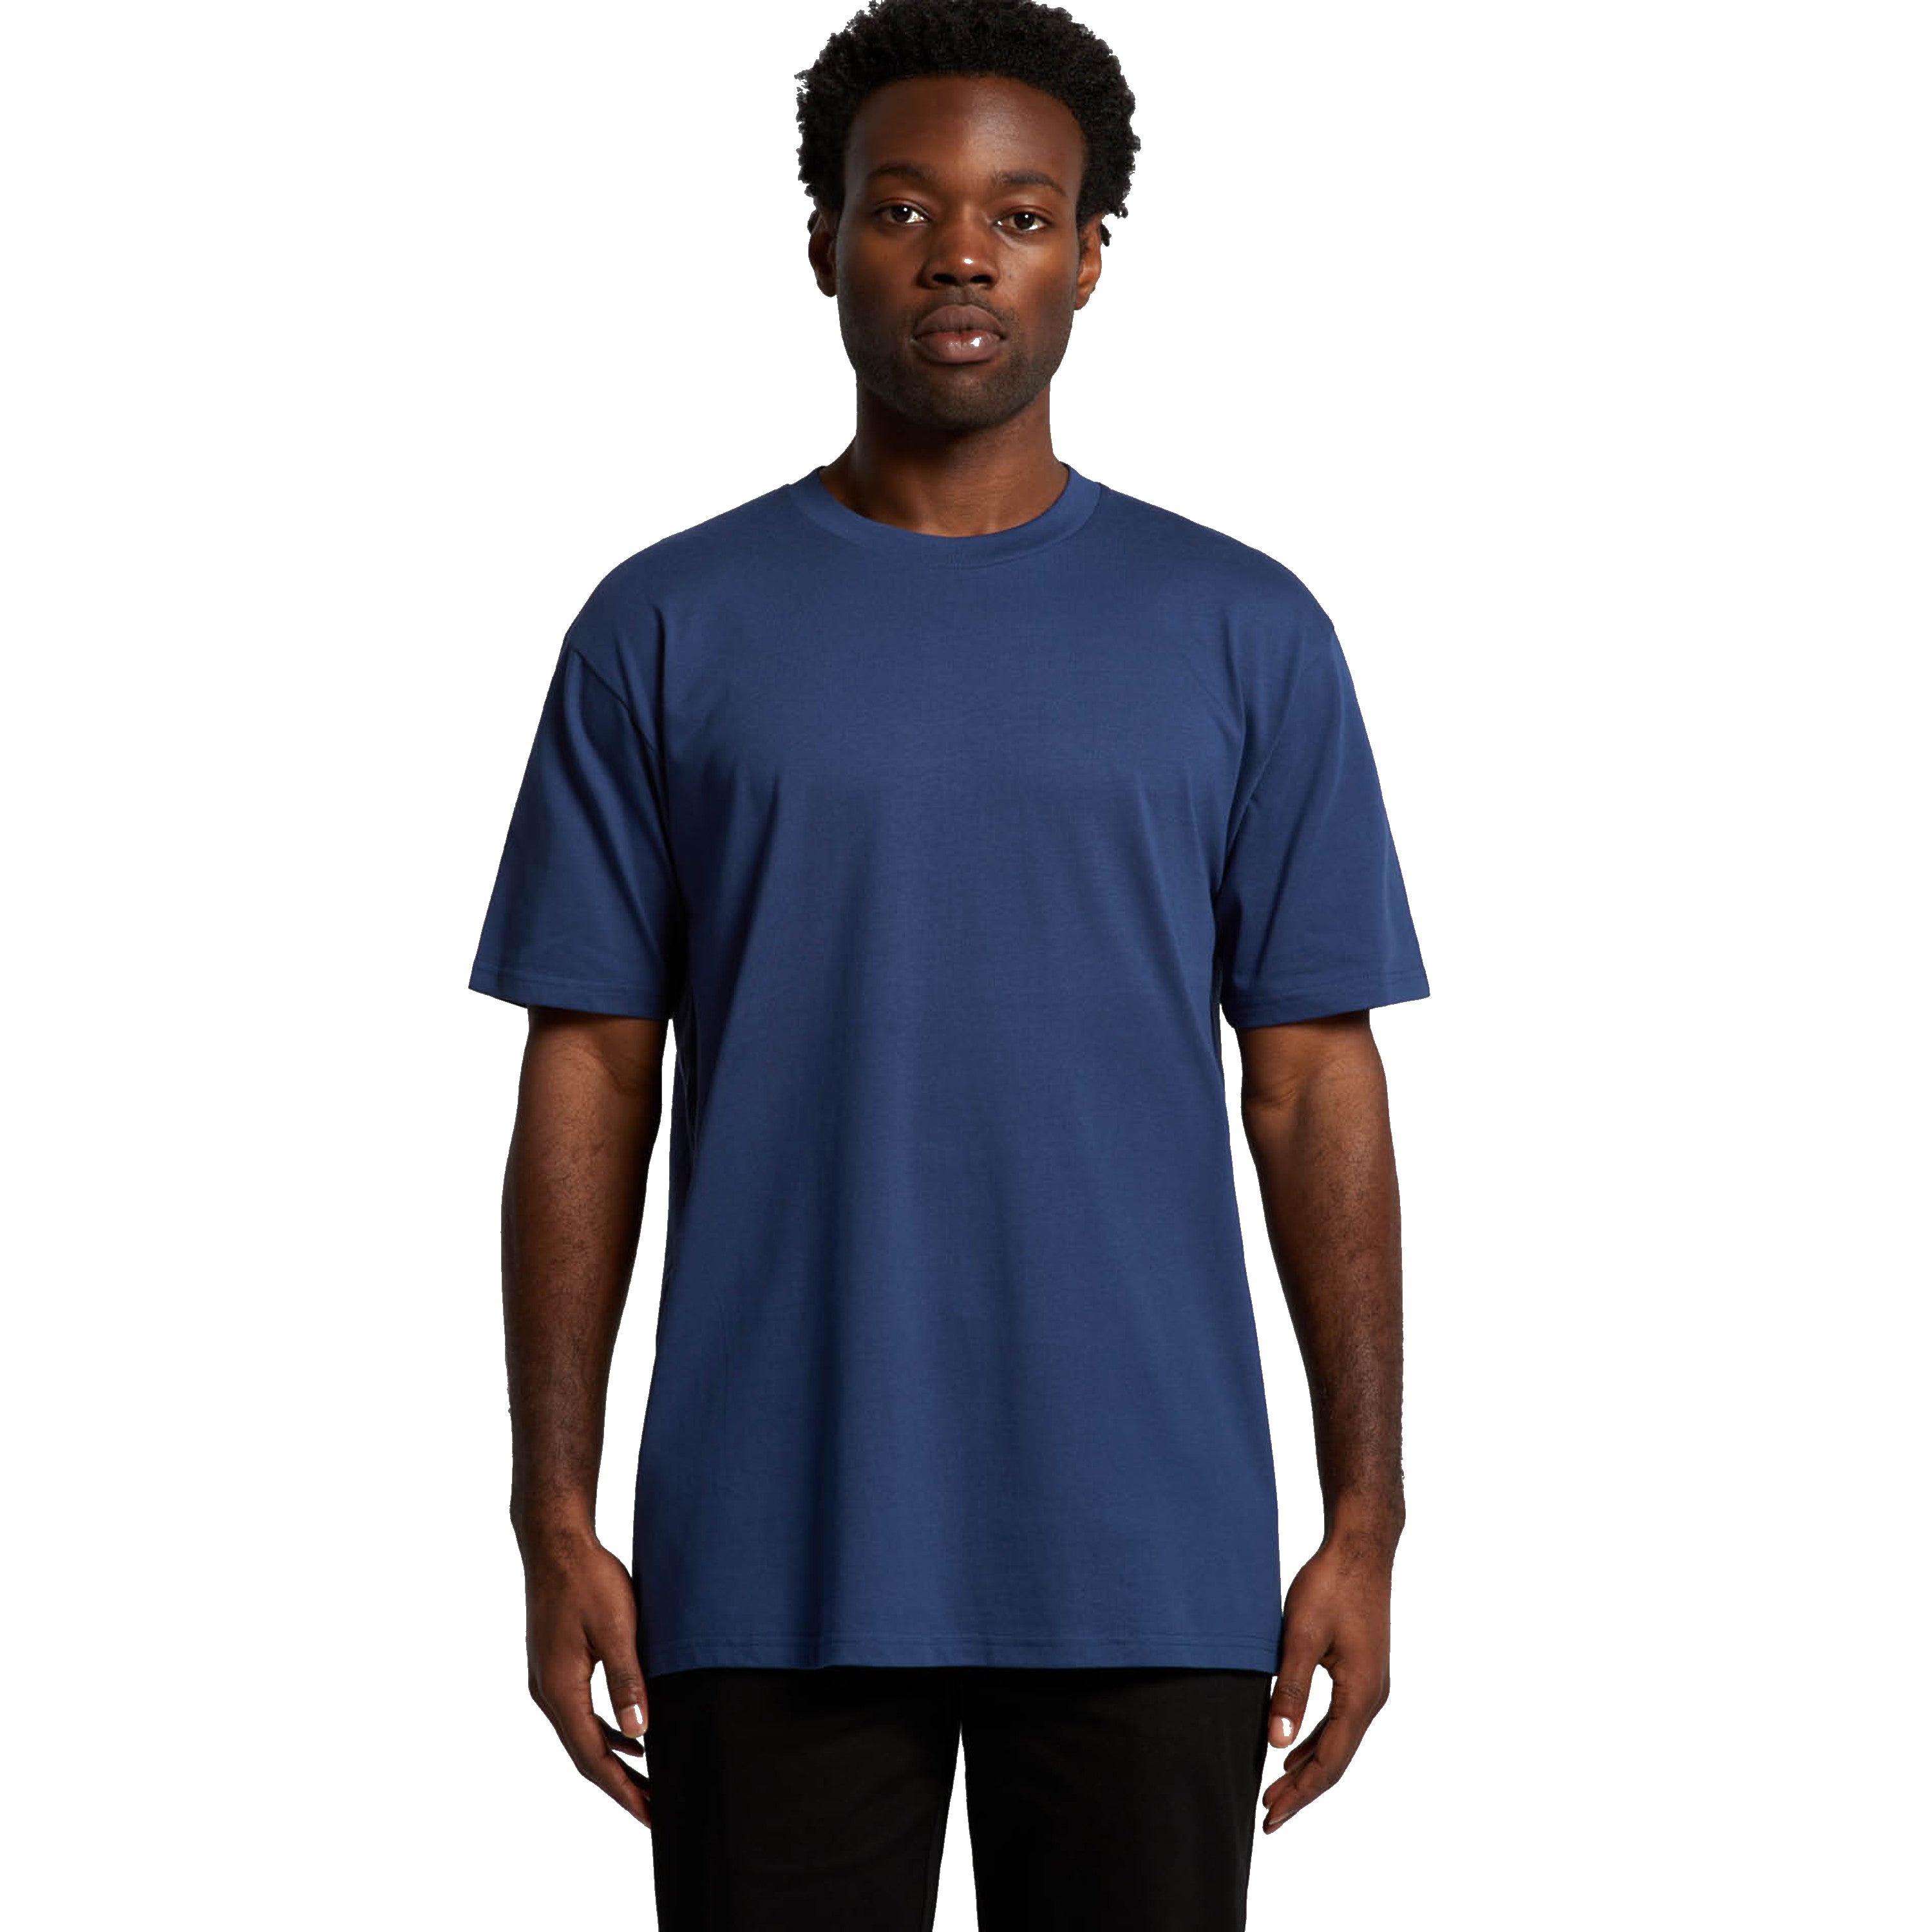 Genuine US Army T-shirt Khaki Combed Cotton Shirt Short Sleeves Military  NEW -  Canada